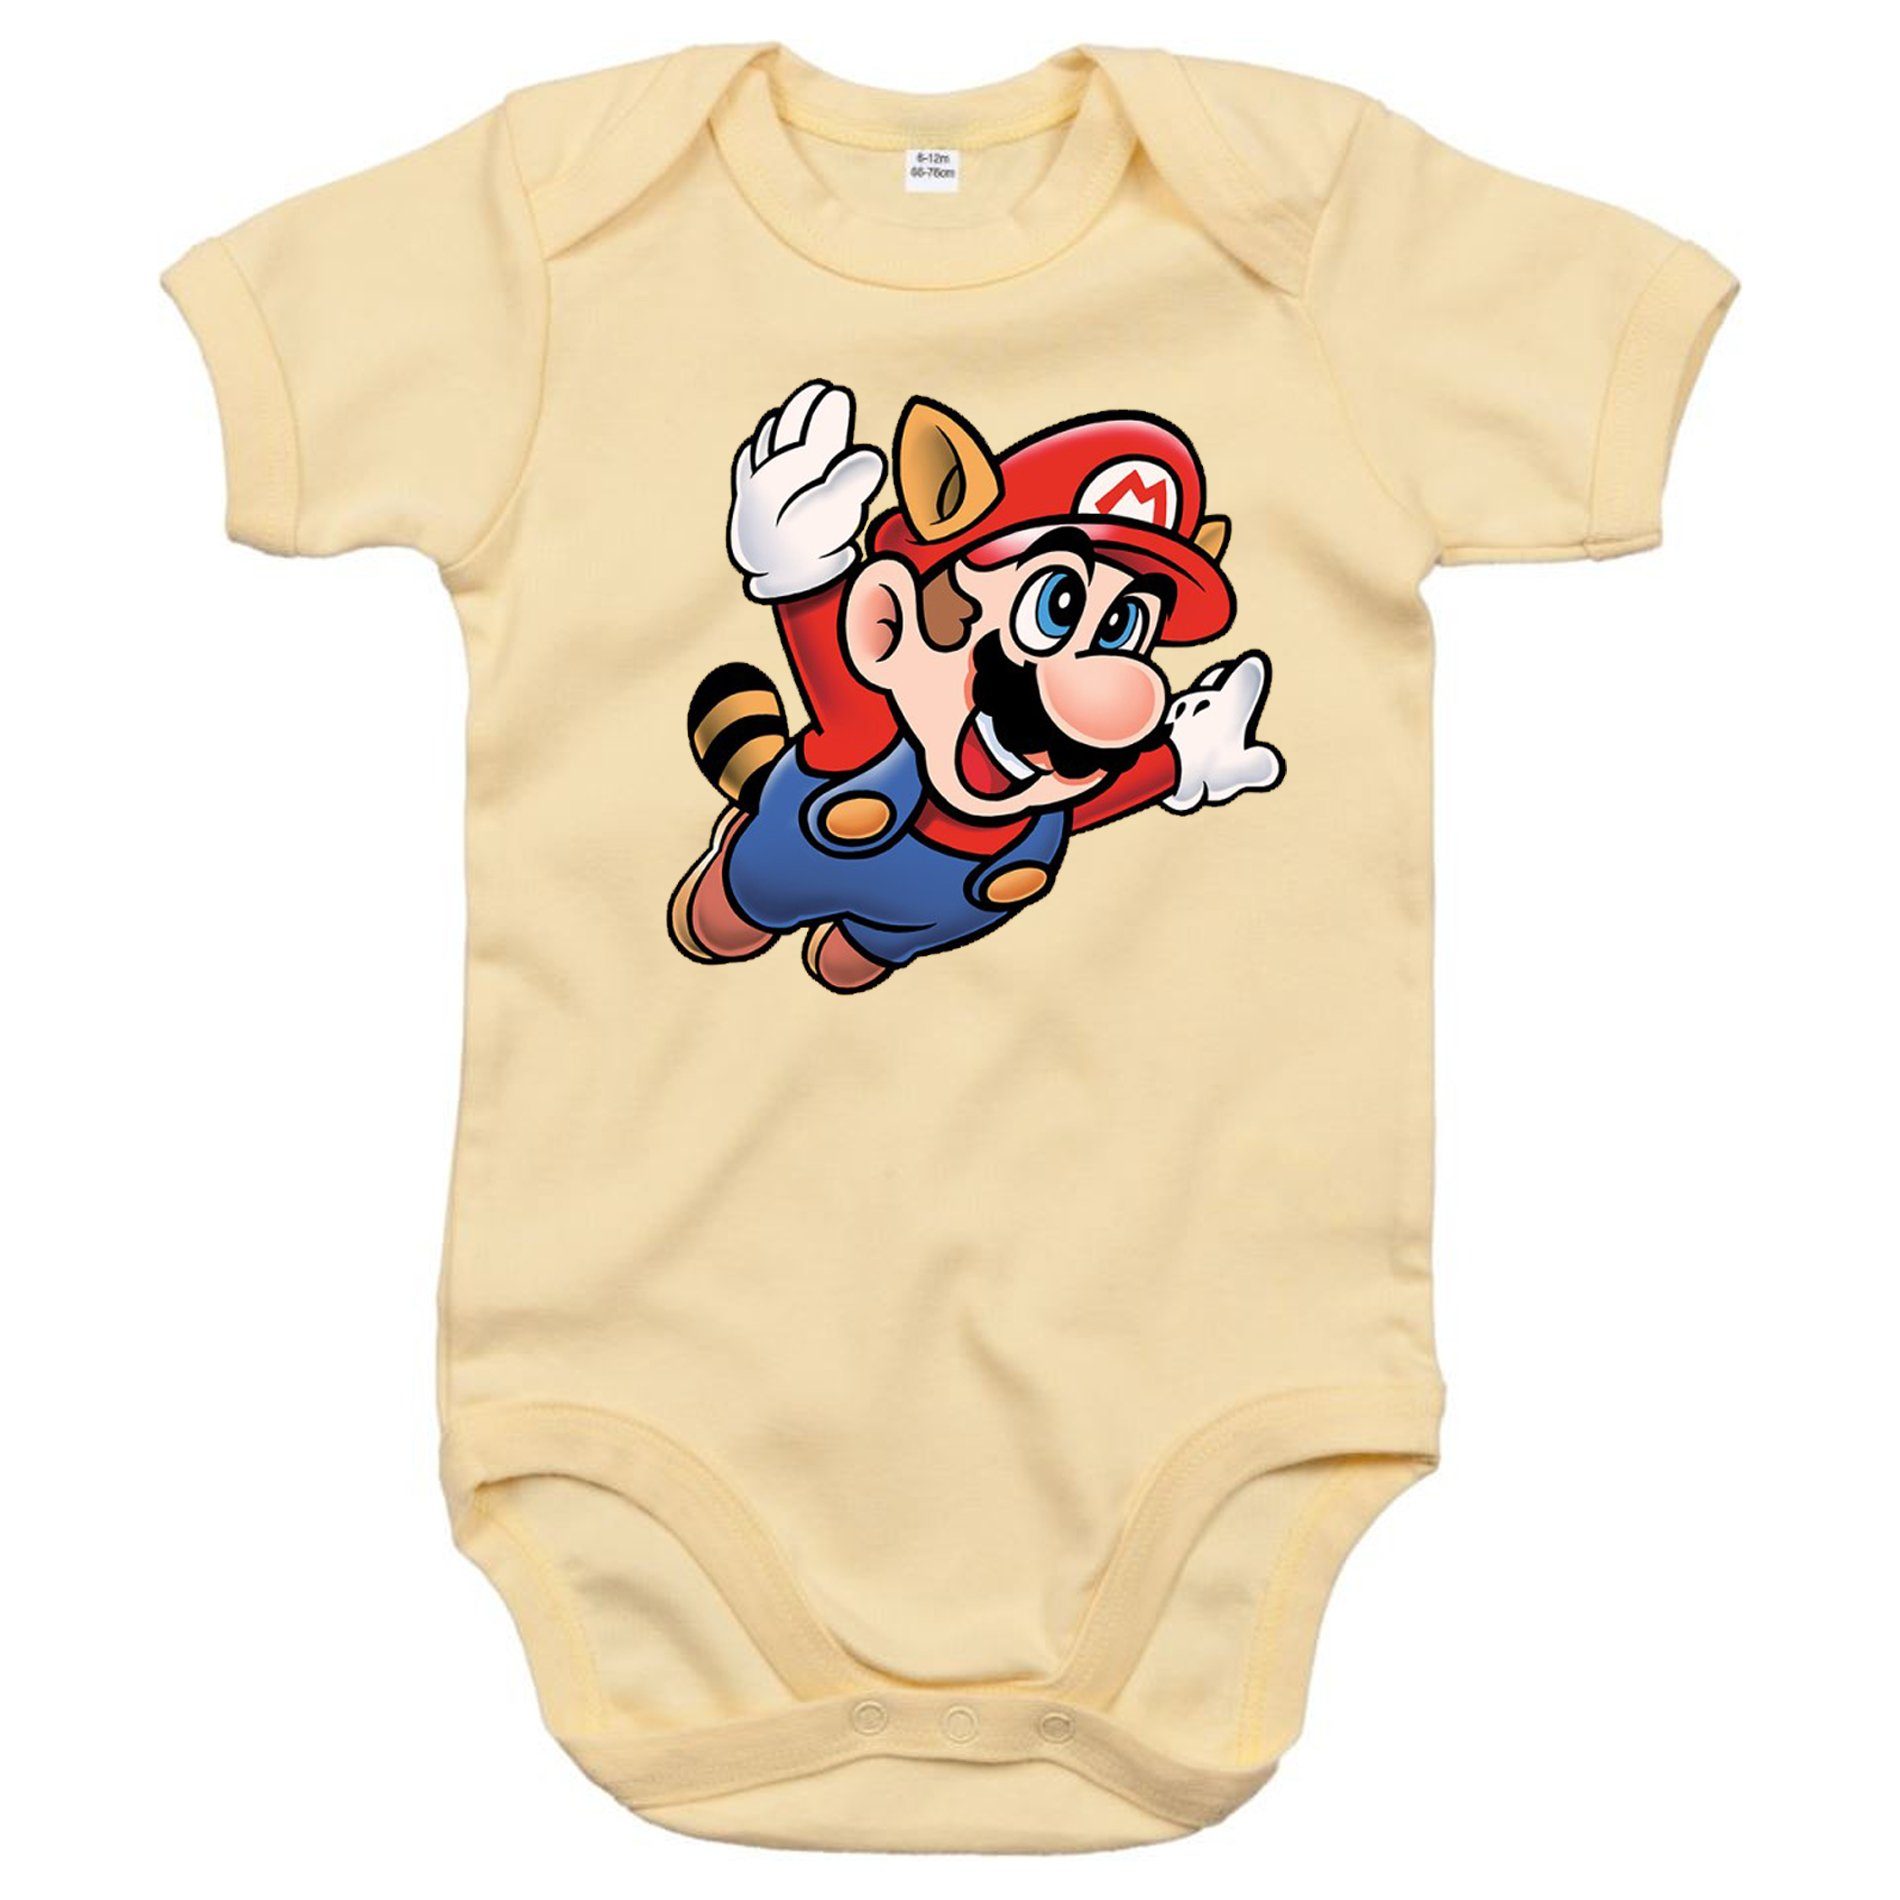 Blondie & Brownie Strampler Kinder Baby Super Mario 3 Fligh Nintendo Gamer Nerd Konsole Beige